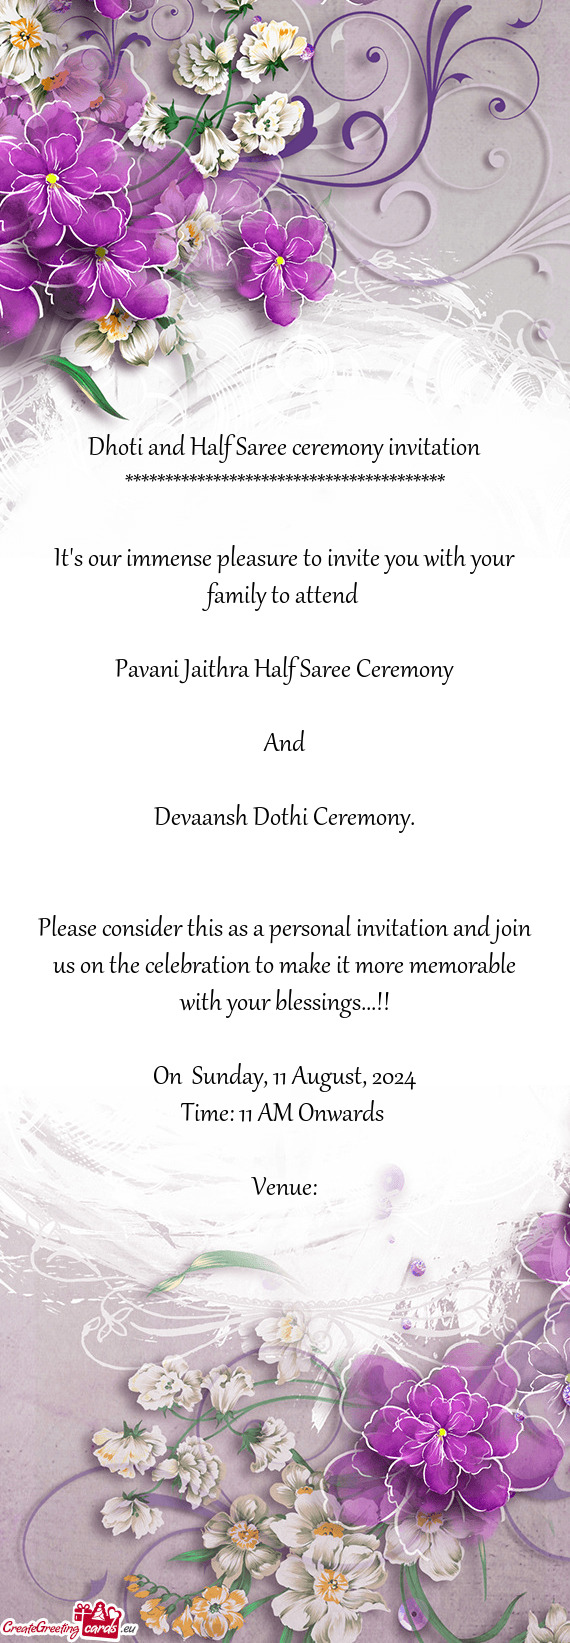 Pavani Jaithra Half Saree Ceremony